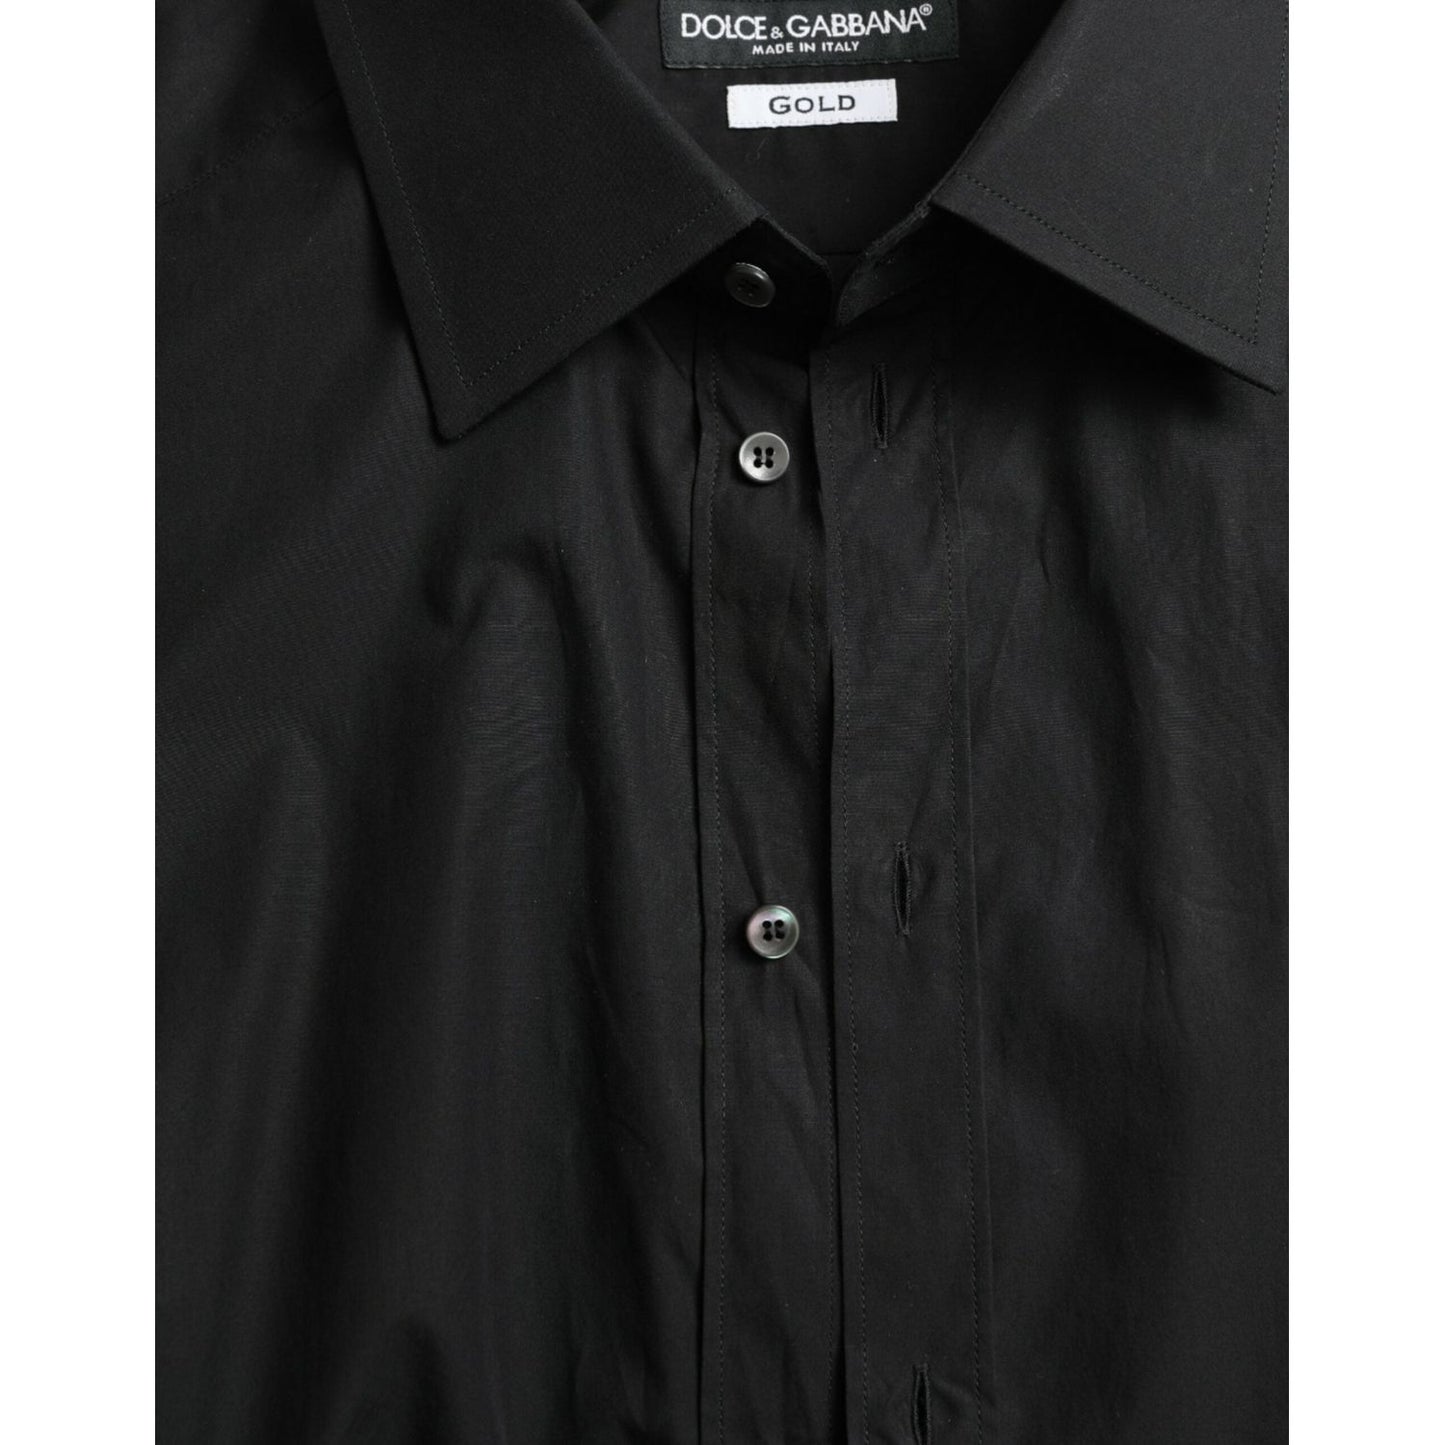 Dolce & Gabbana Sleek Black Slim Fit Italian Dress Shirt black-cotton-men-formal-gold-dress-shirt